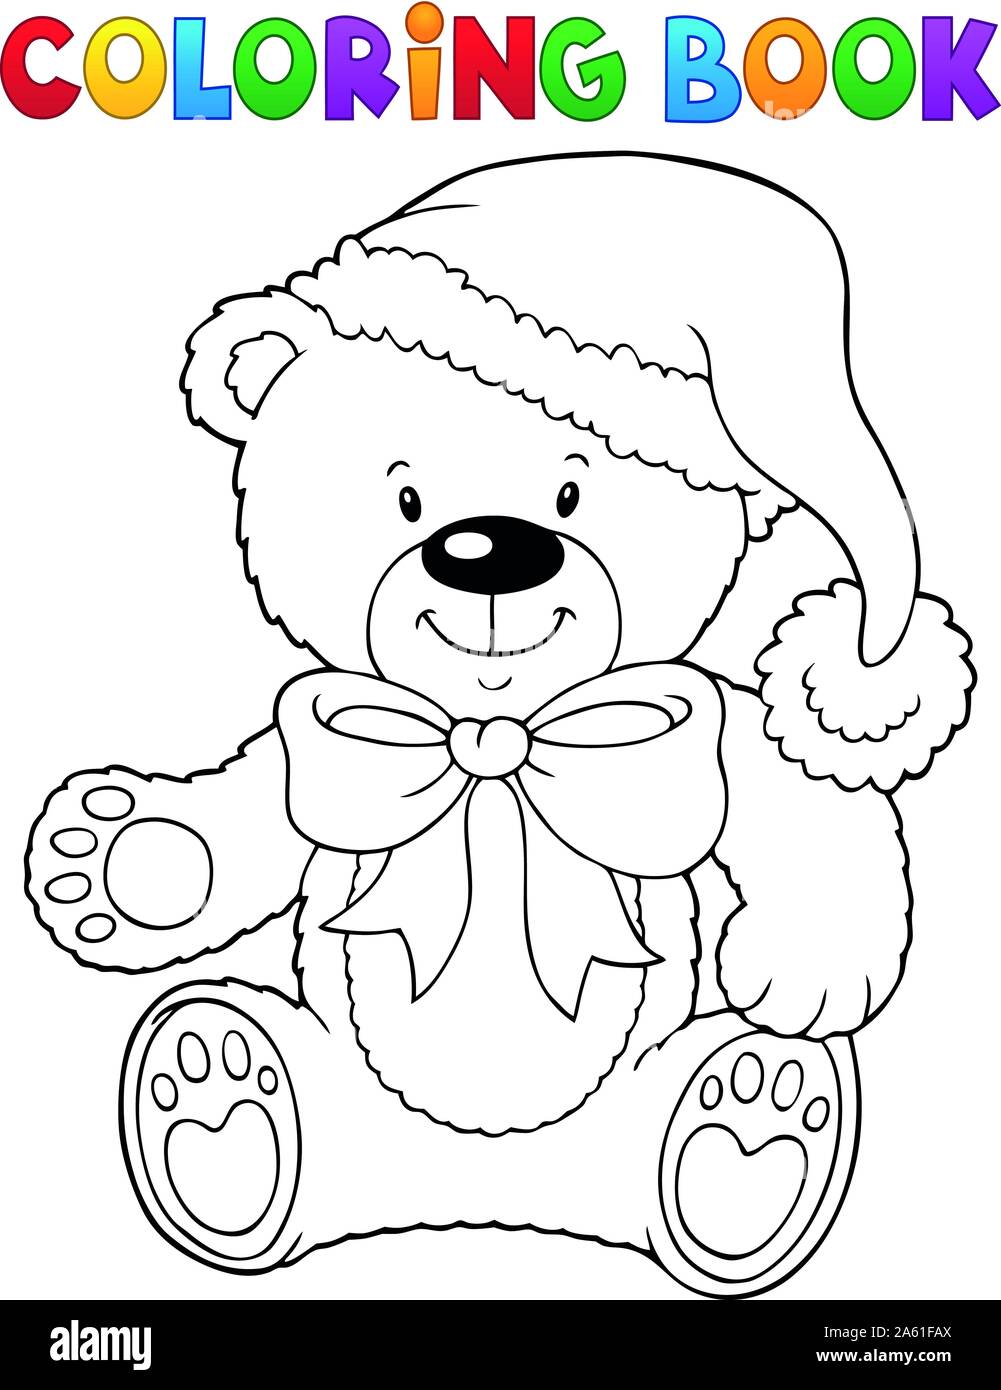 Coloring book christmas teddy bear topic